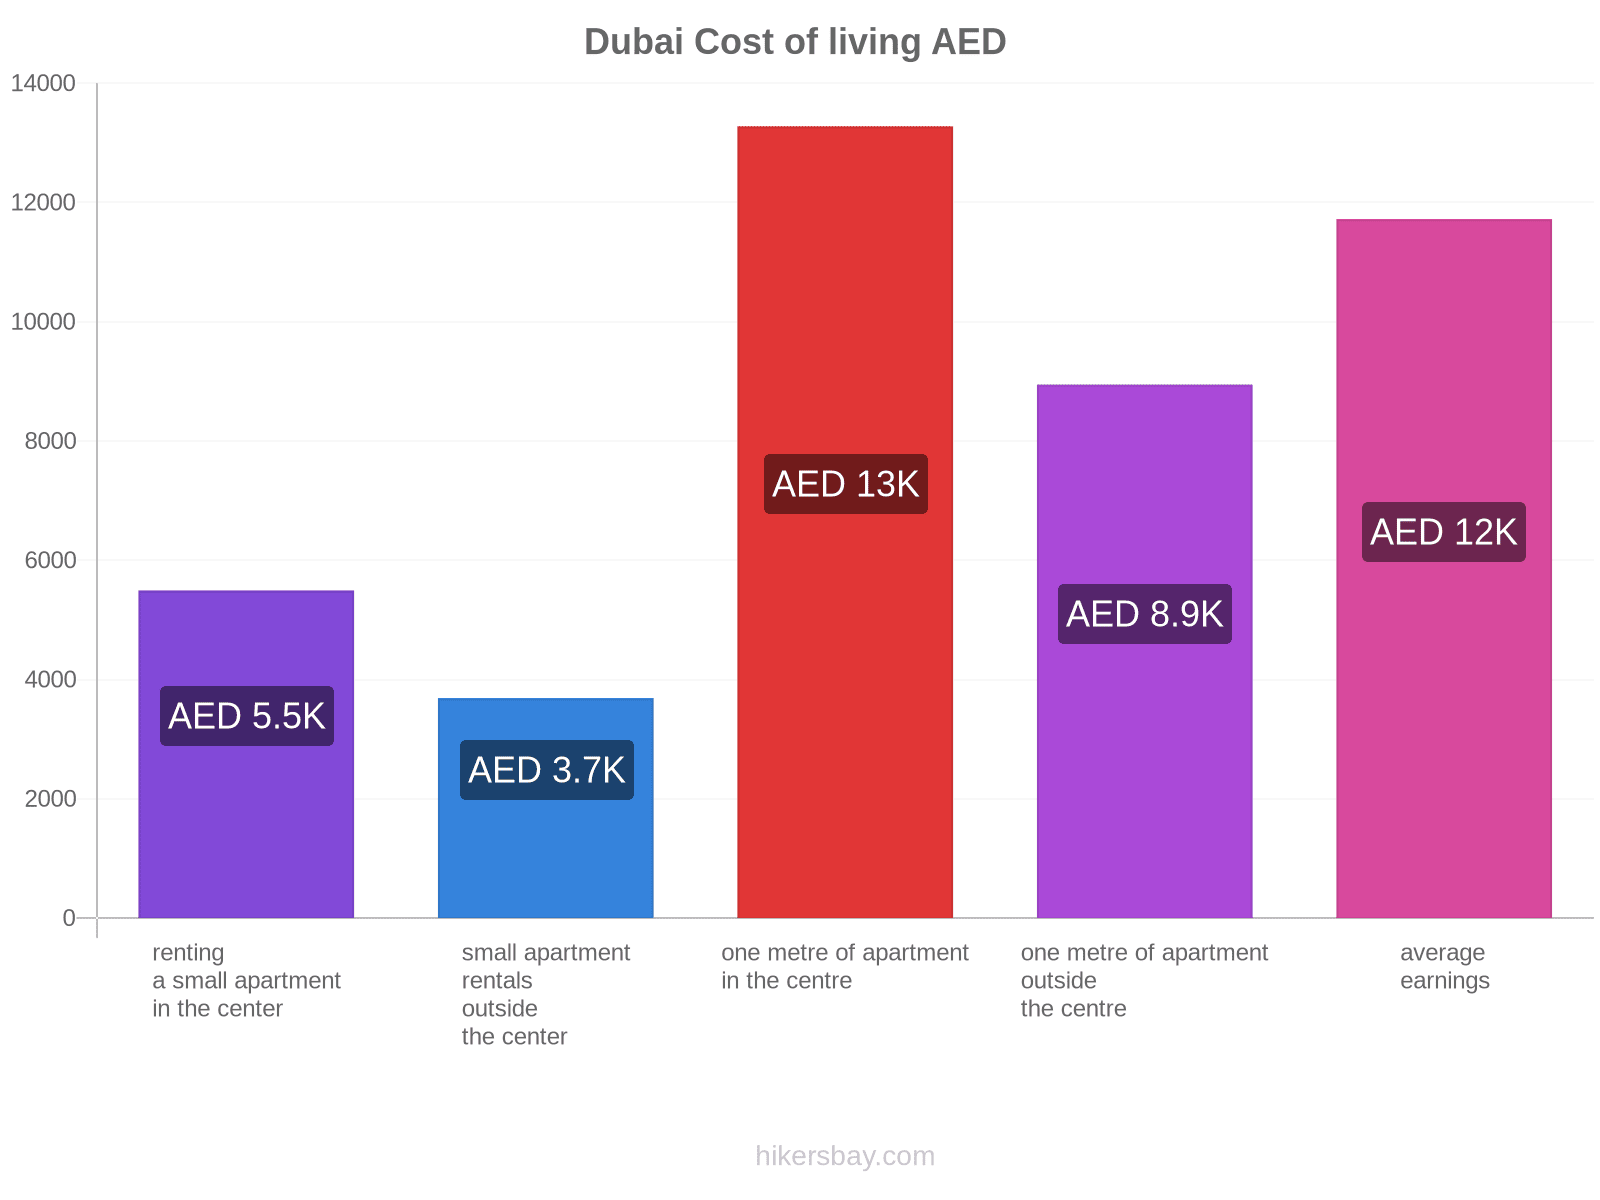 Dubai cost of living hikersbay.com